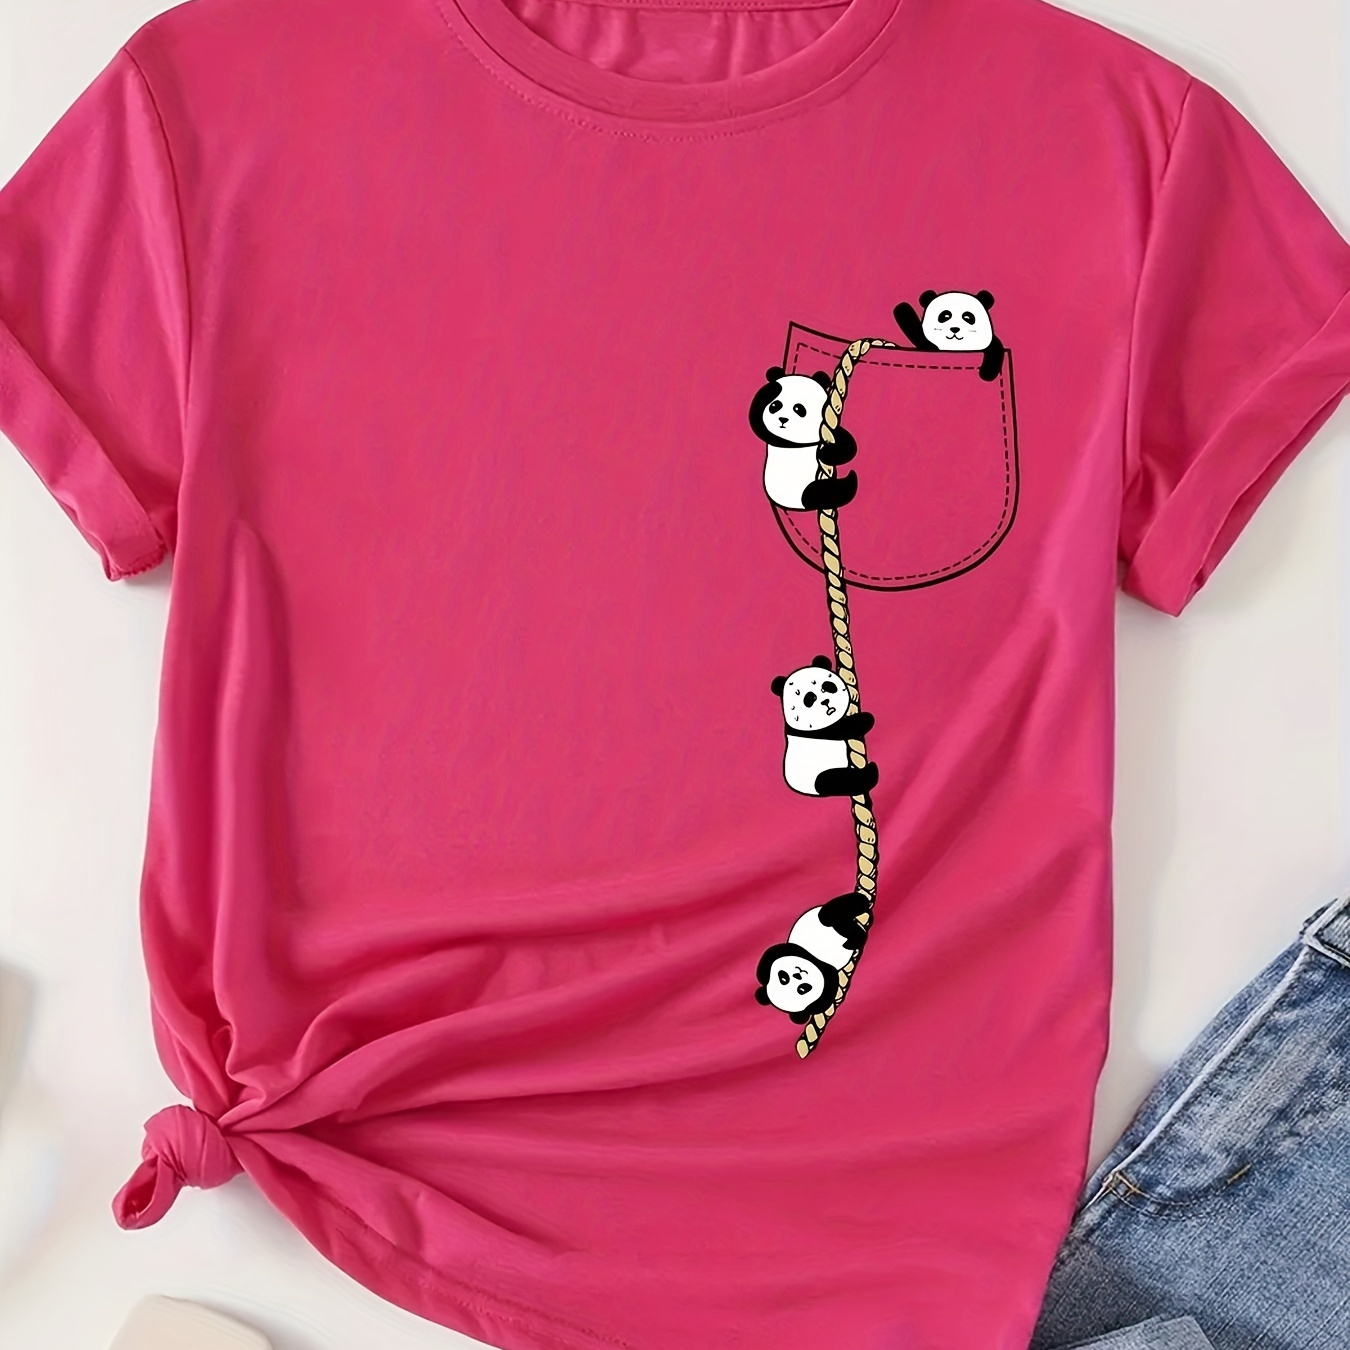 

Panda Print Pocket T-shirt, Short Sleeve Crew Neck Casual Top For Summer & Spring, Women's Clothing